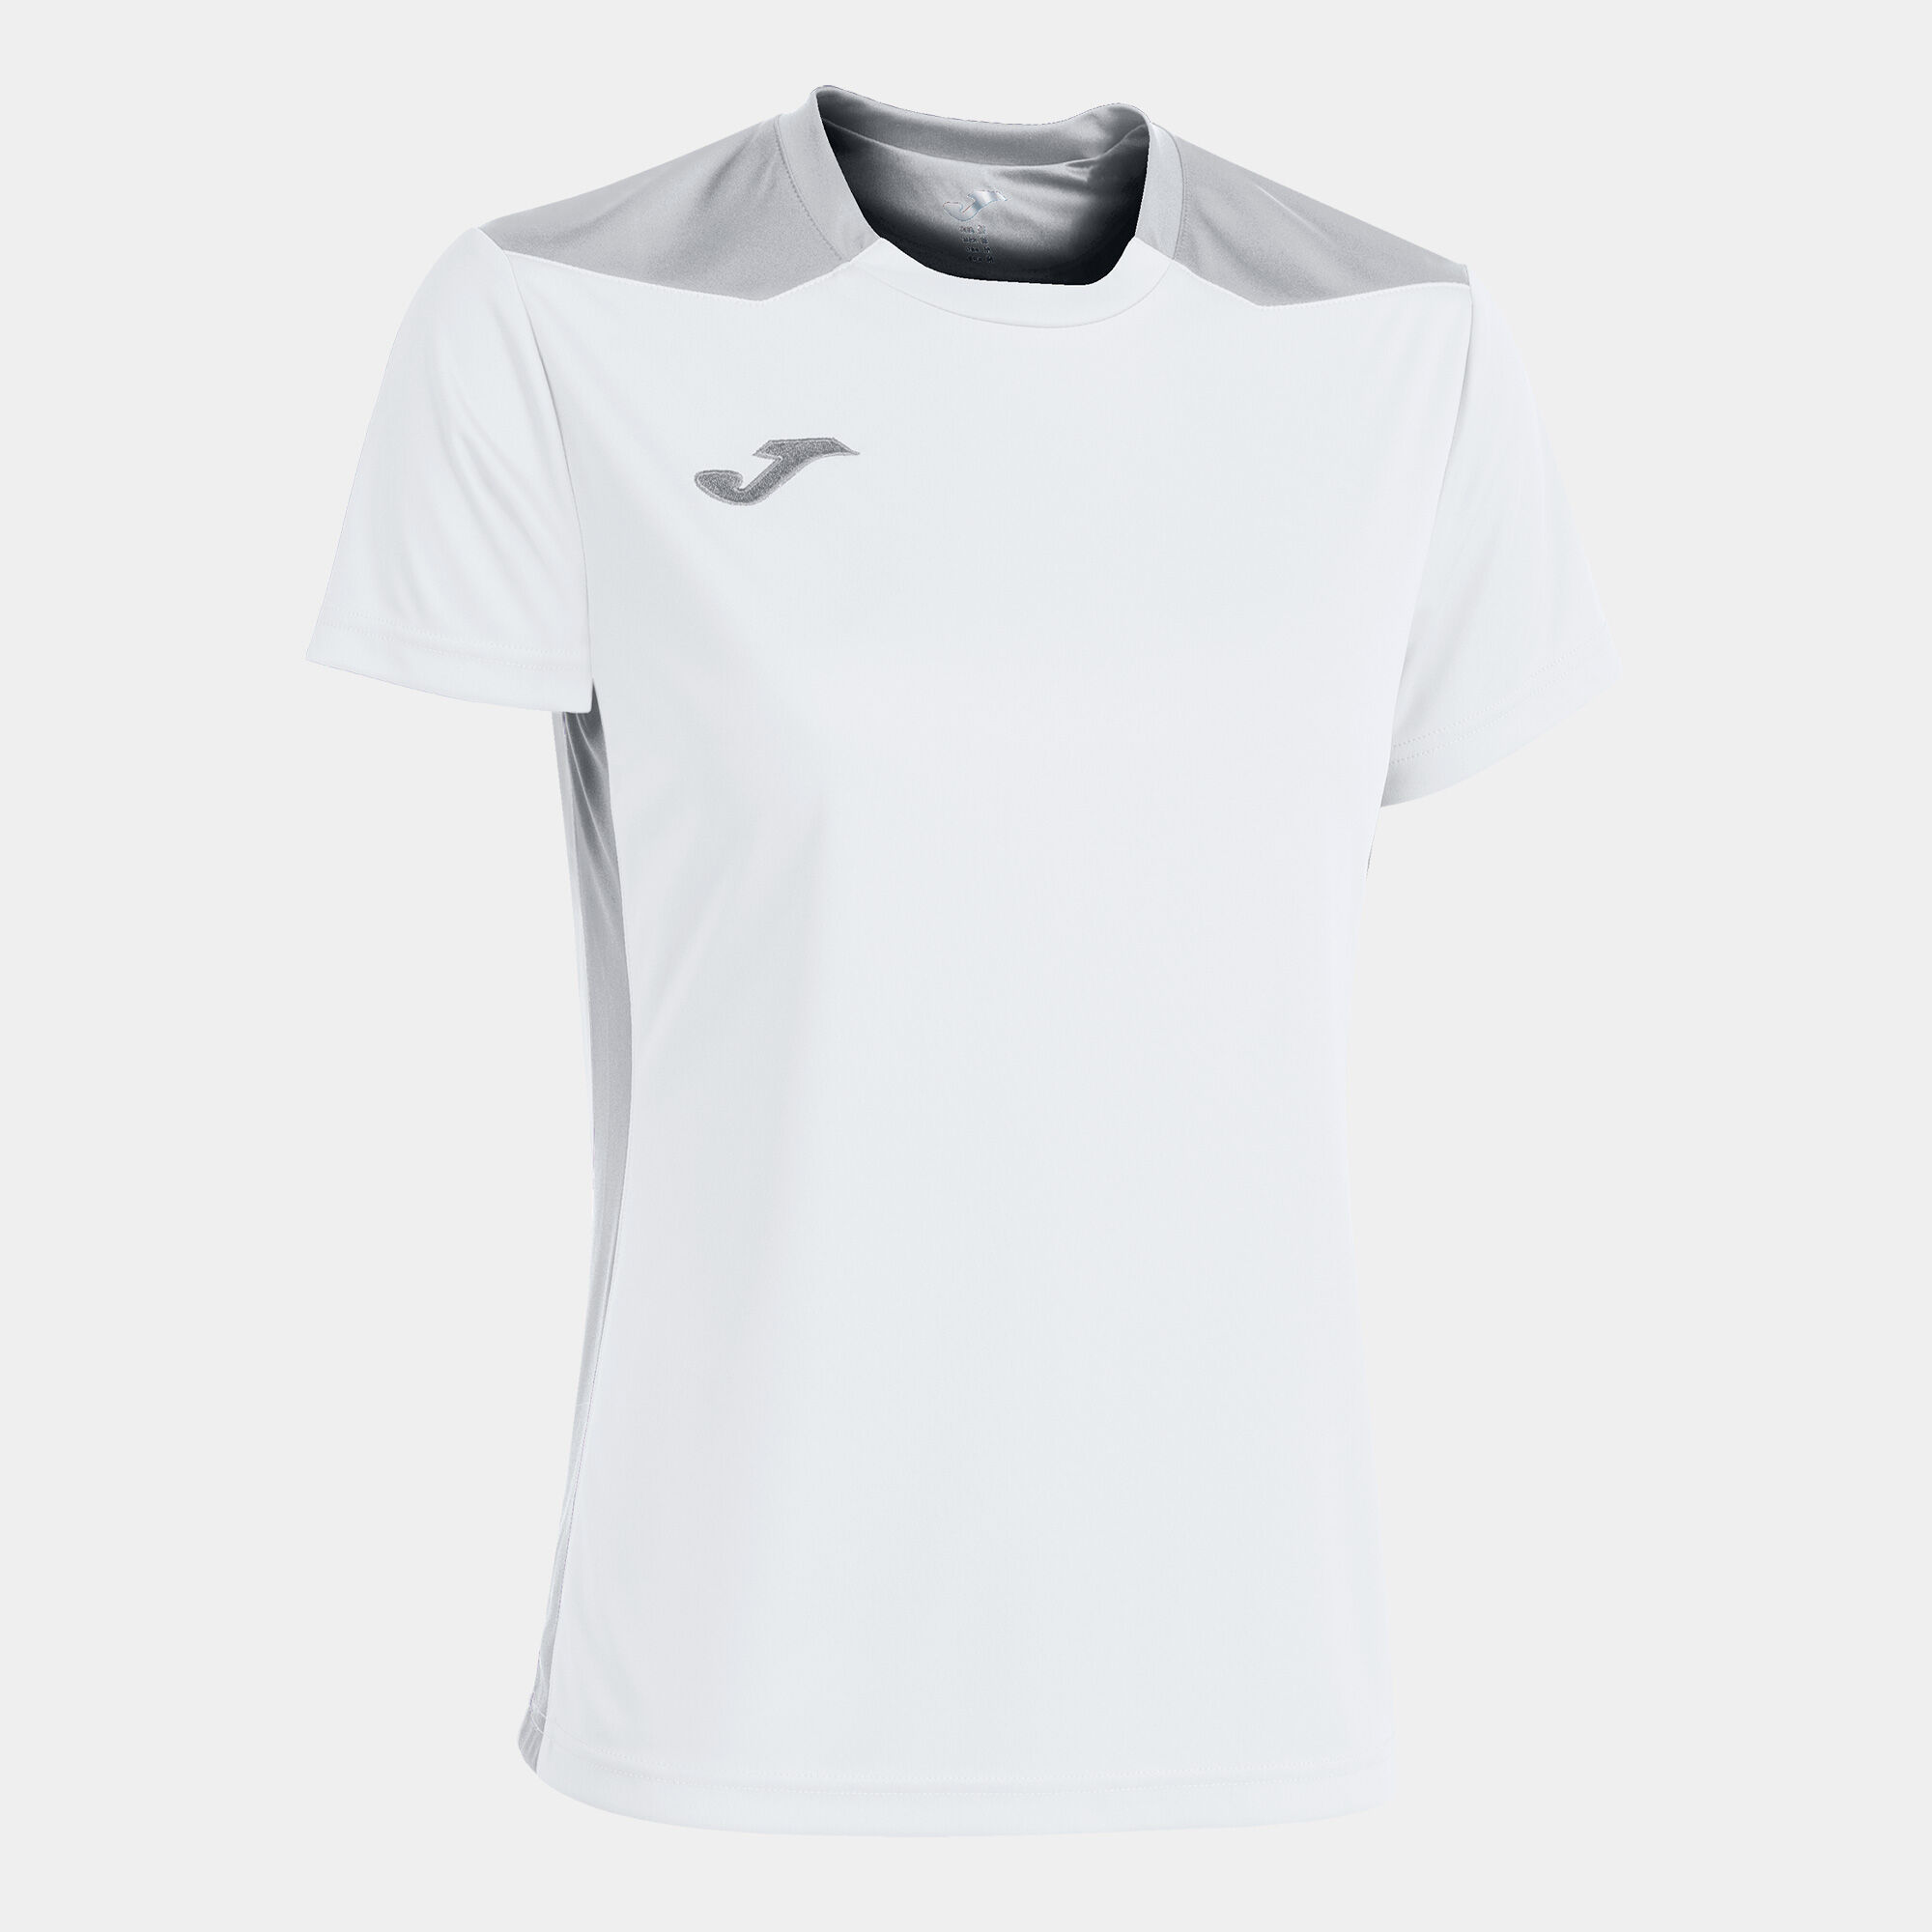 Shirt short sleeve woman Championship VI white gray